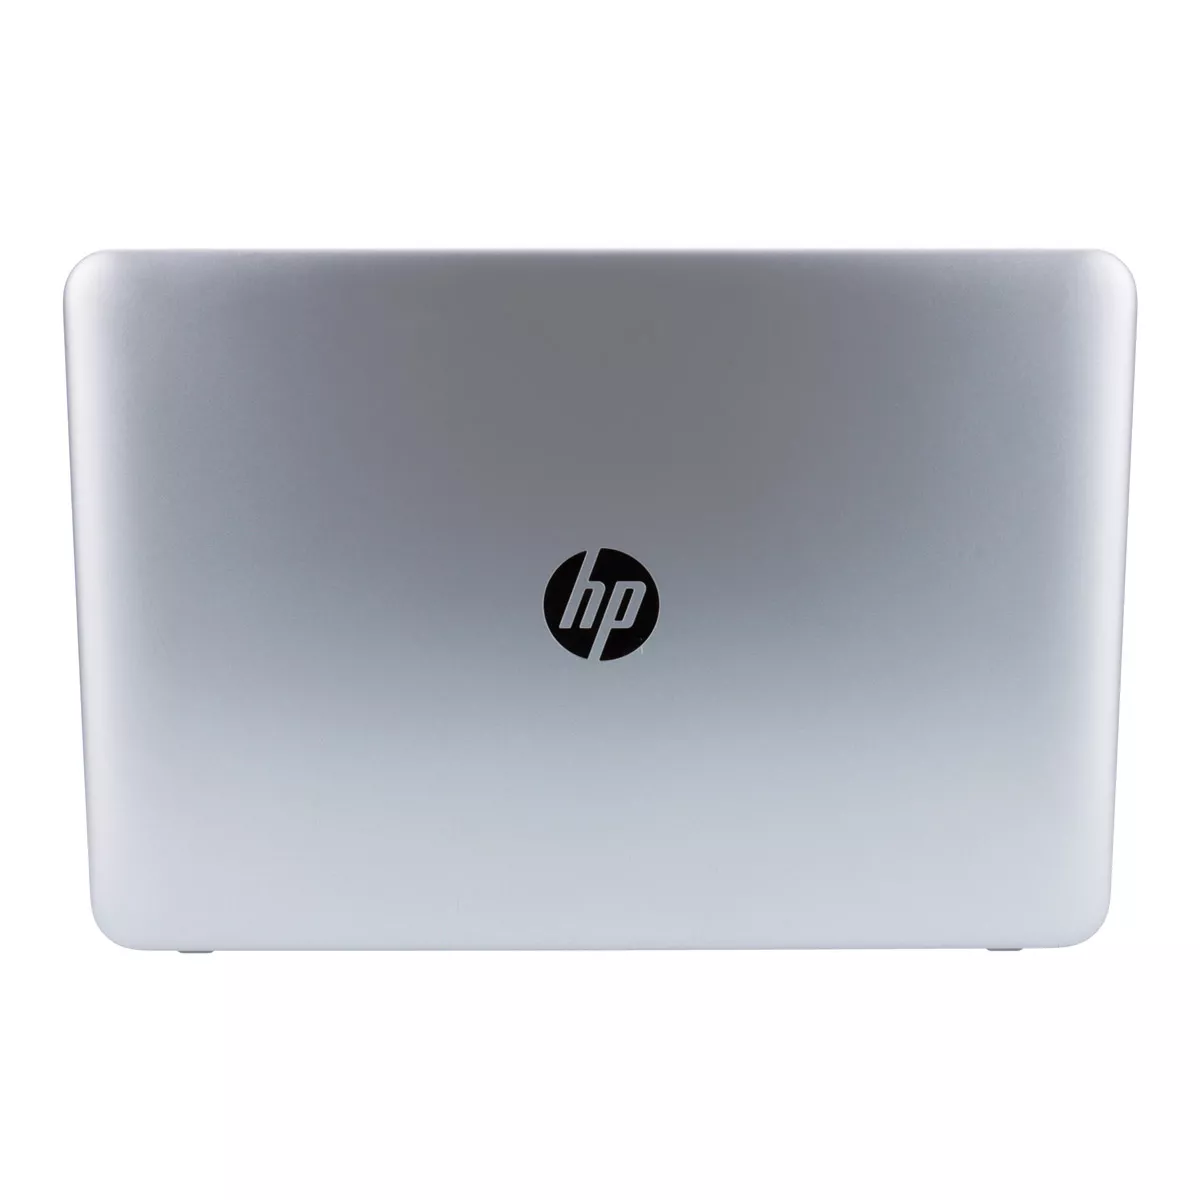 HP ProBook 450 G4 Core i5 7200U Full-HD 8 GB 240 GB M.2 SSD Webcam A